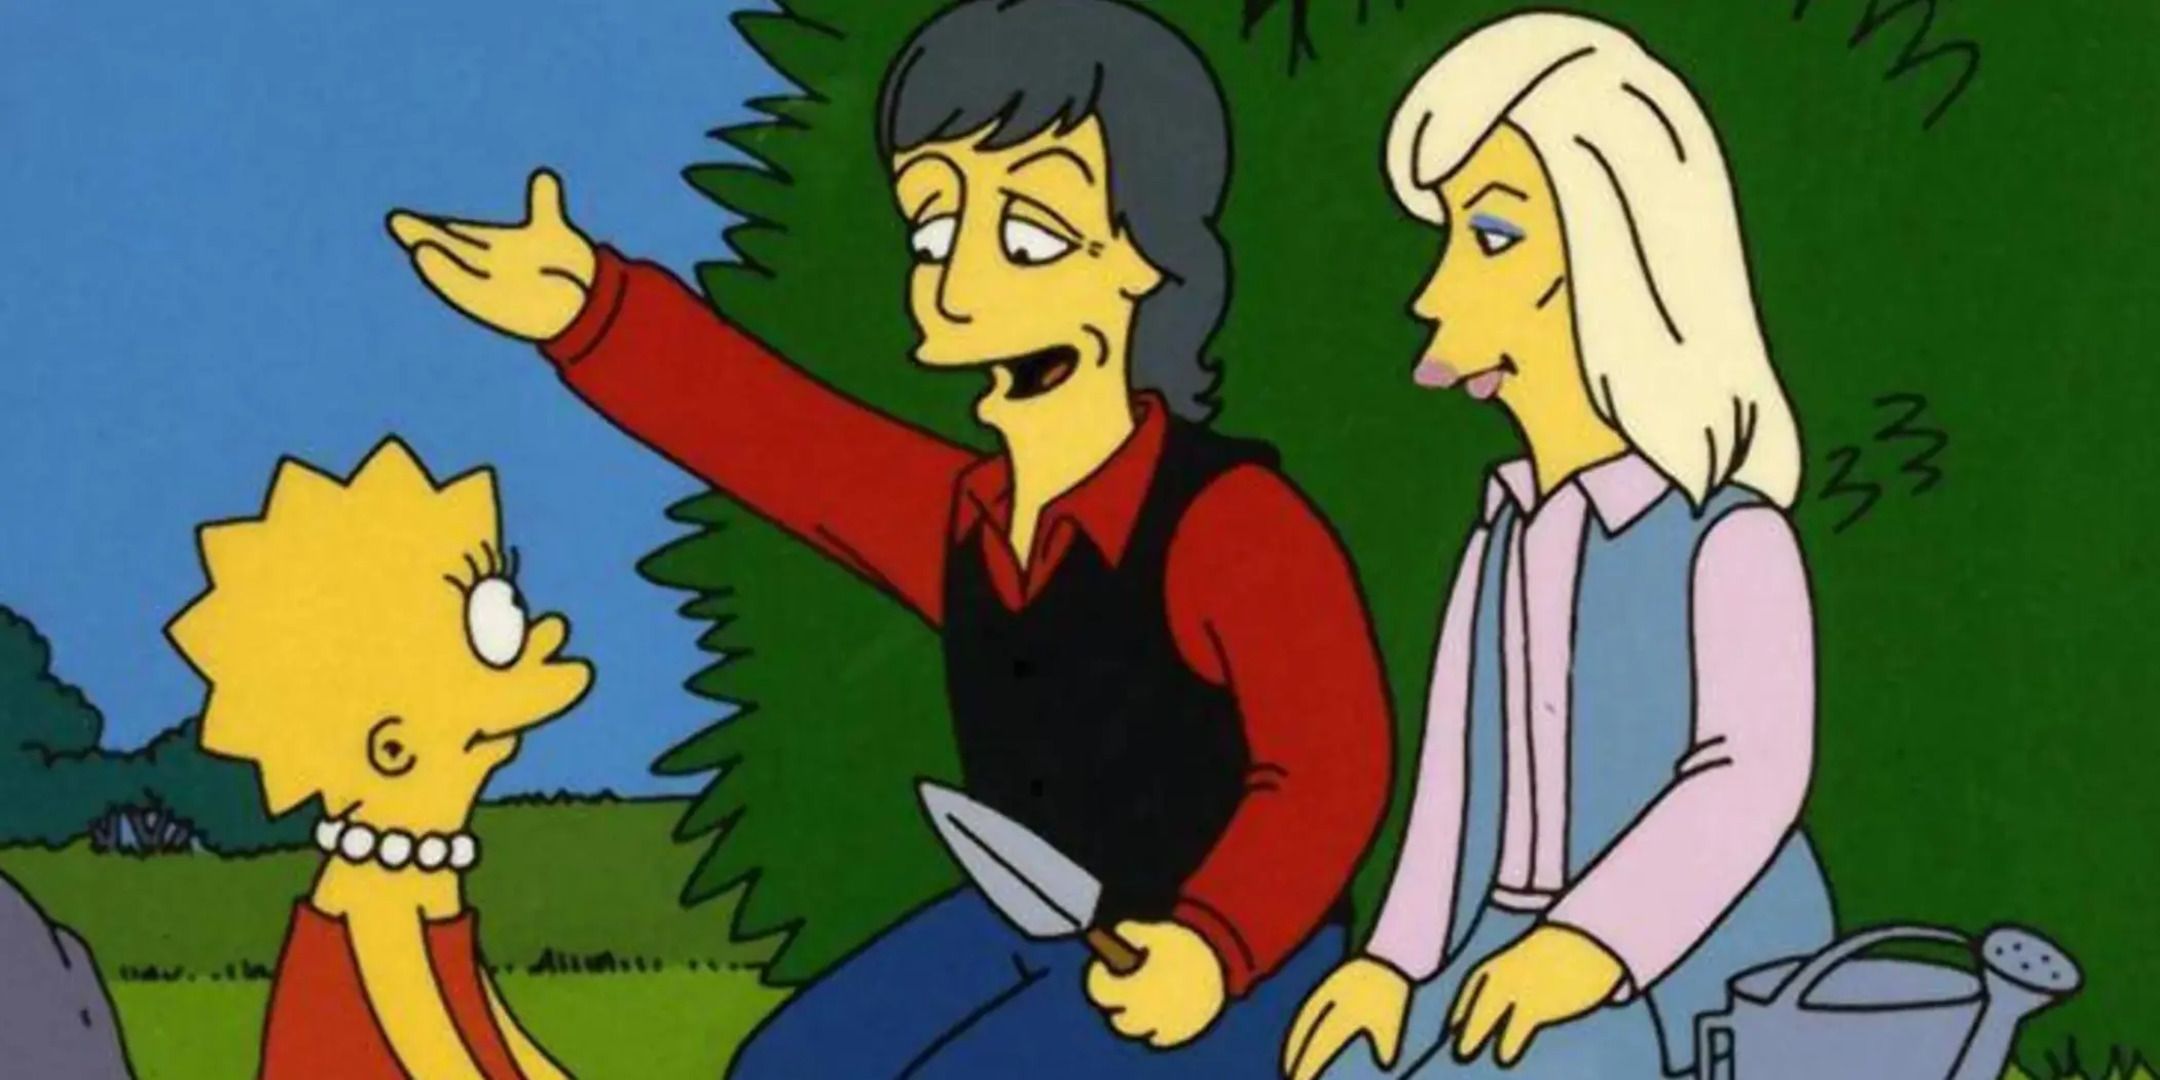 Paul McCartney, Linda McCartney, and Lisa Simpson on The Simpsons